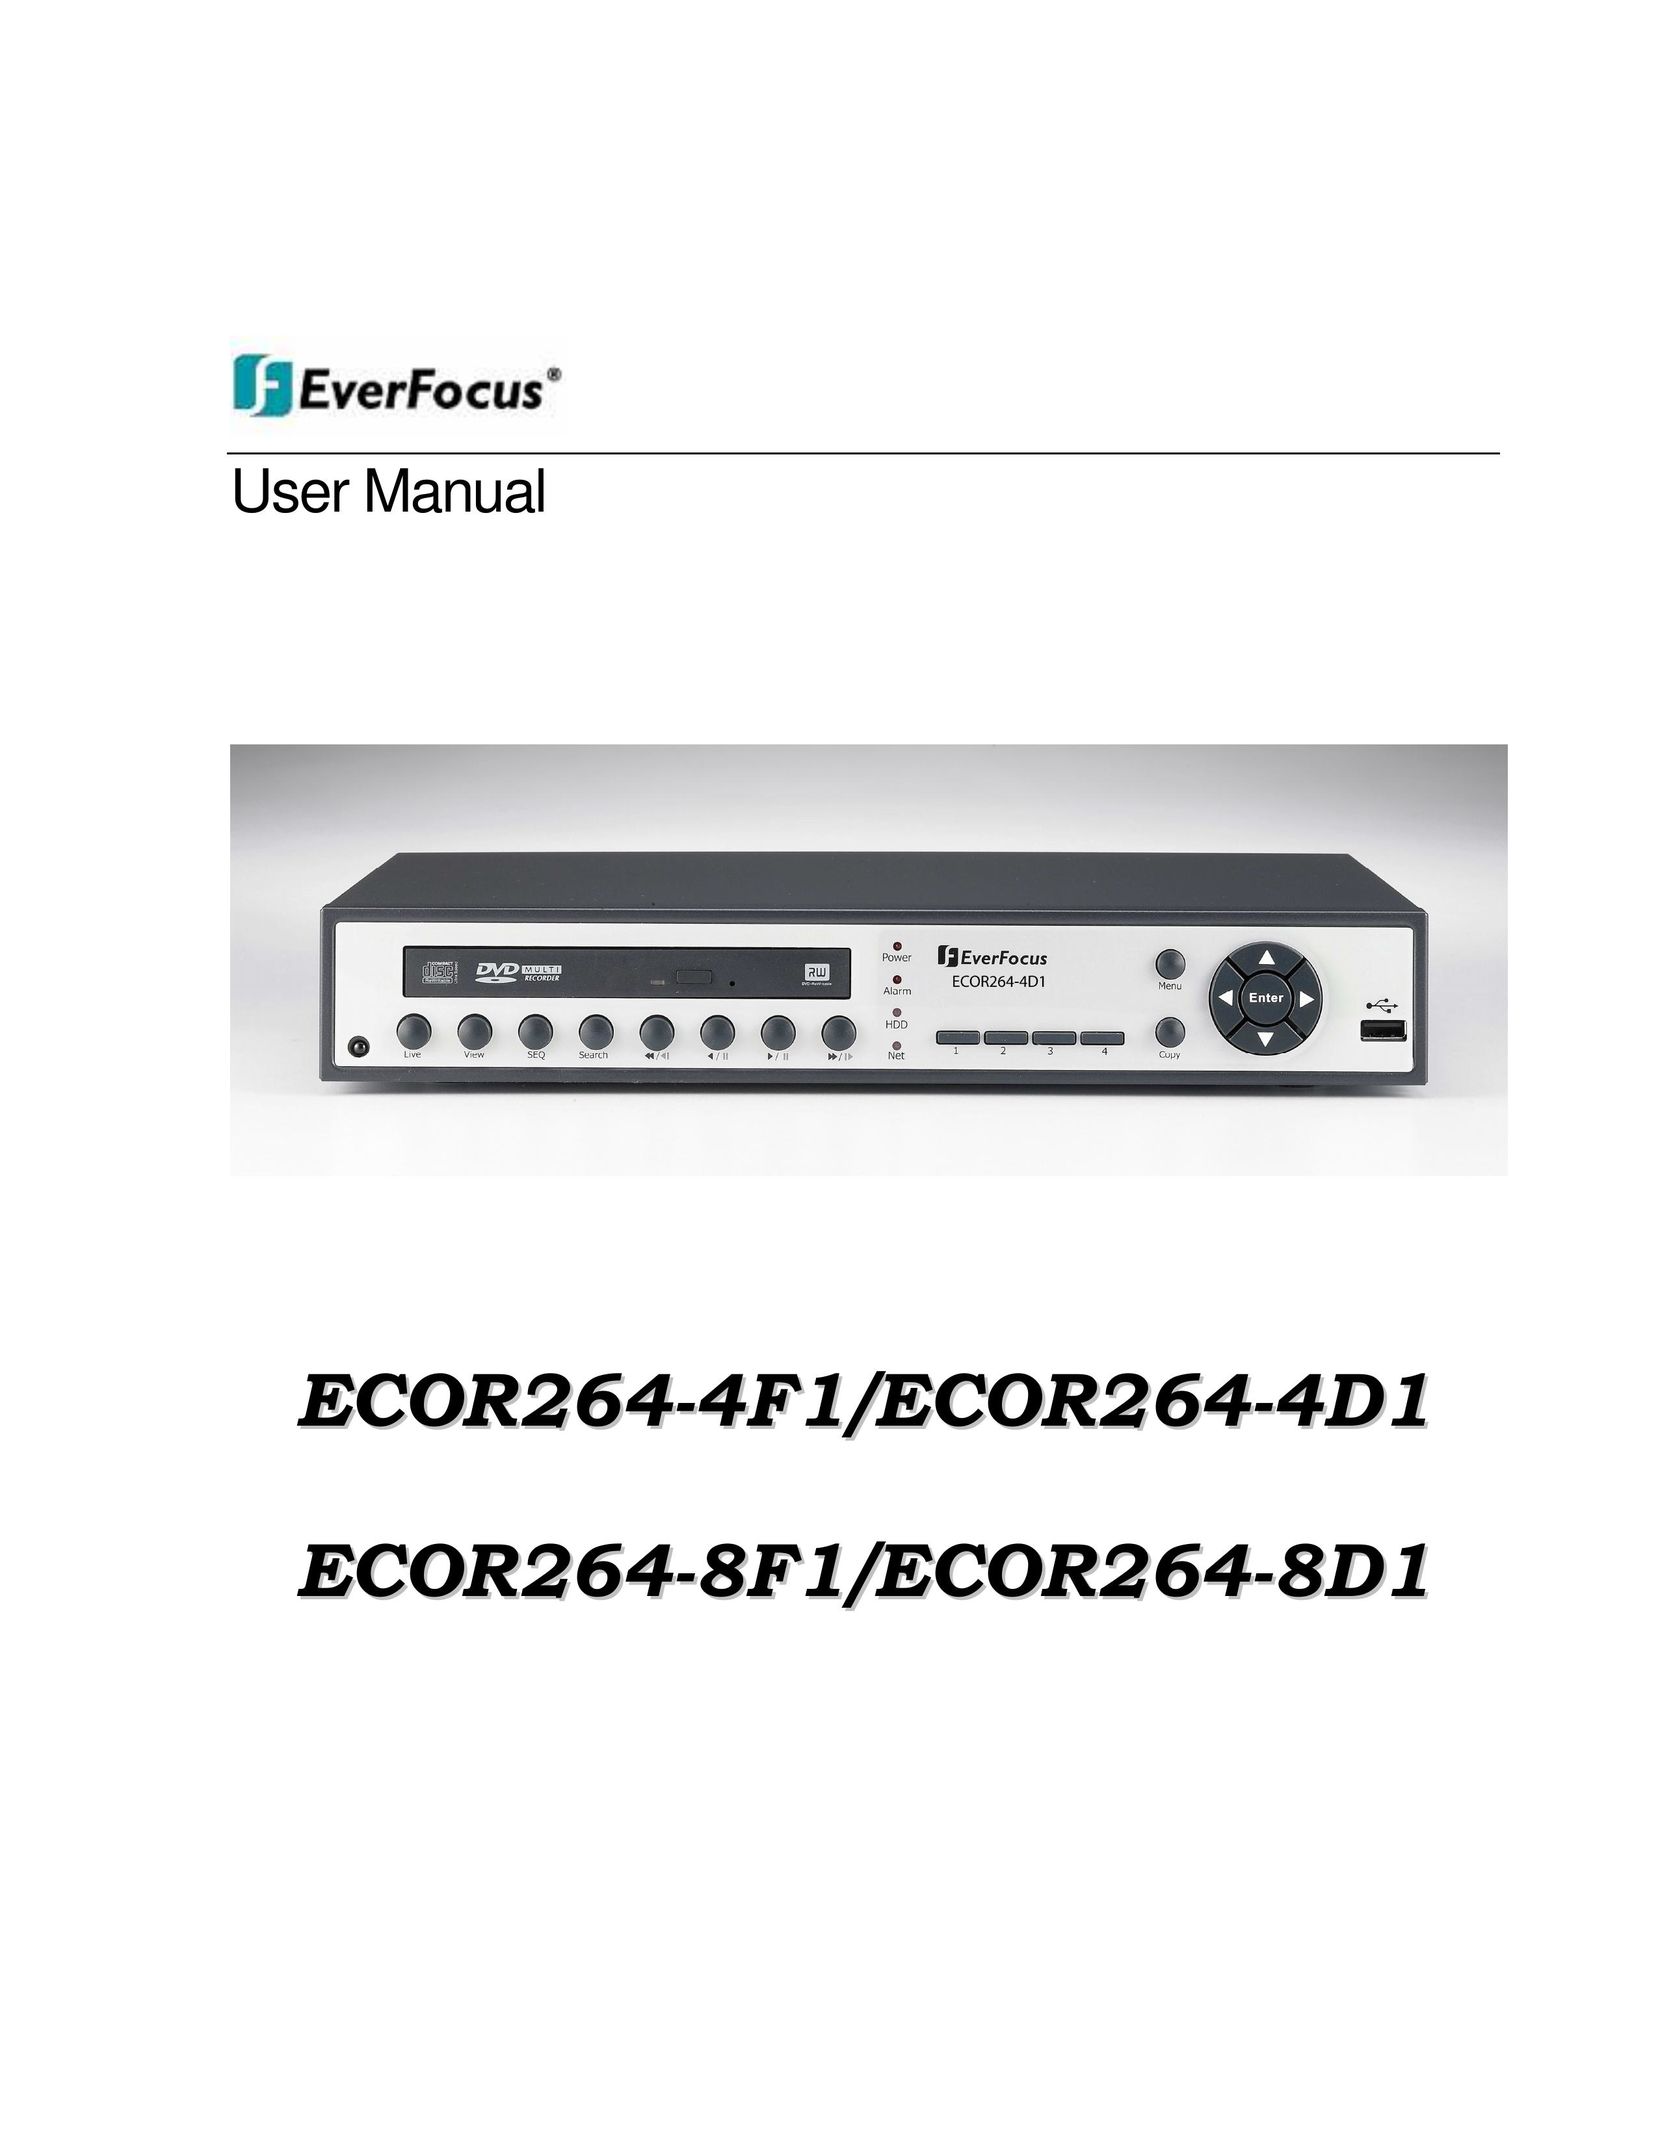 EverFocus ECOR264-4D1 DVR User Manual